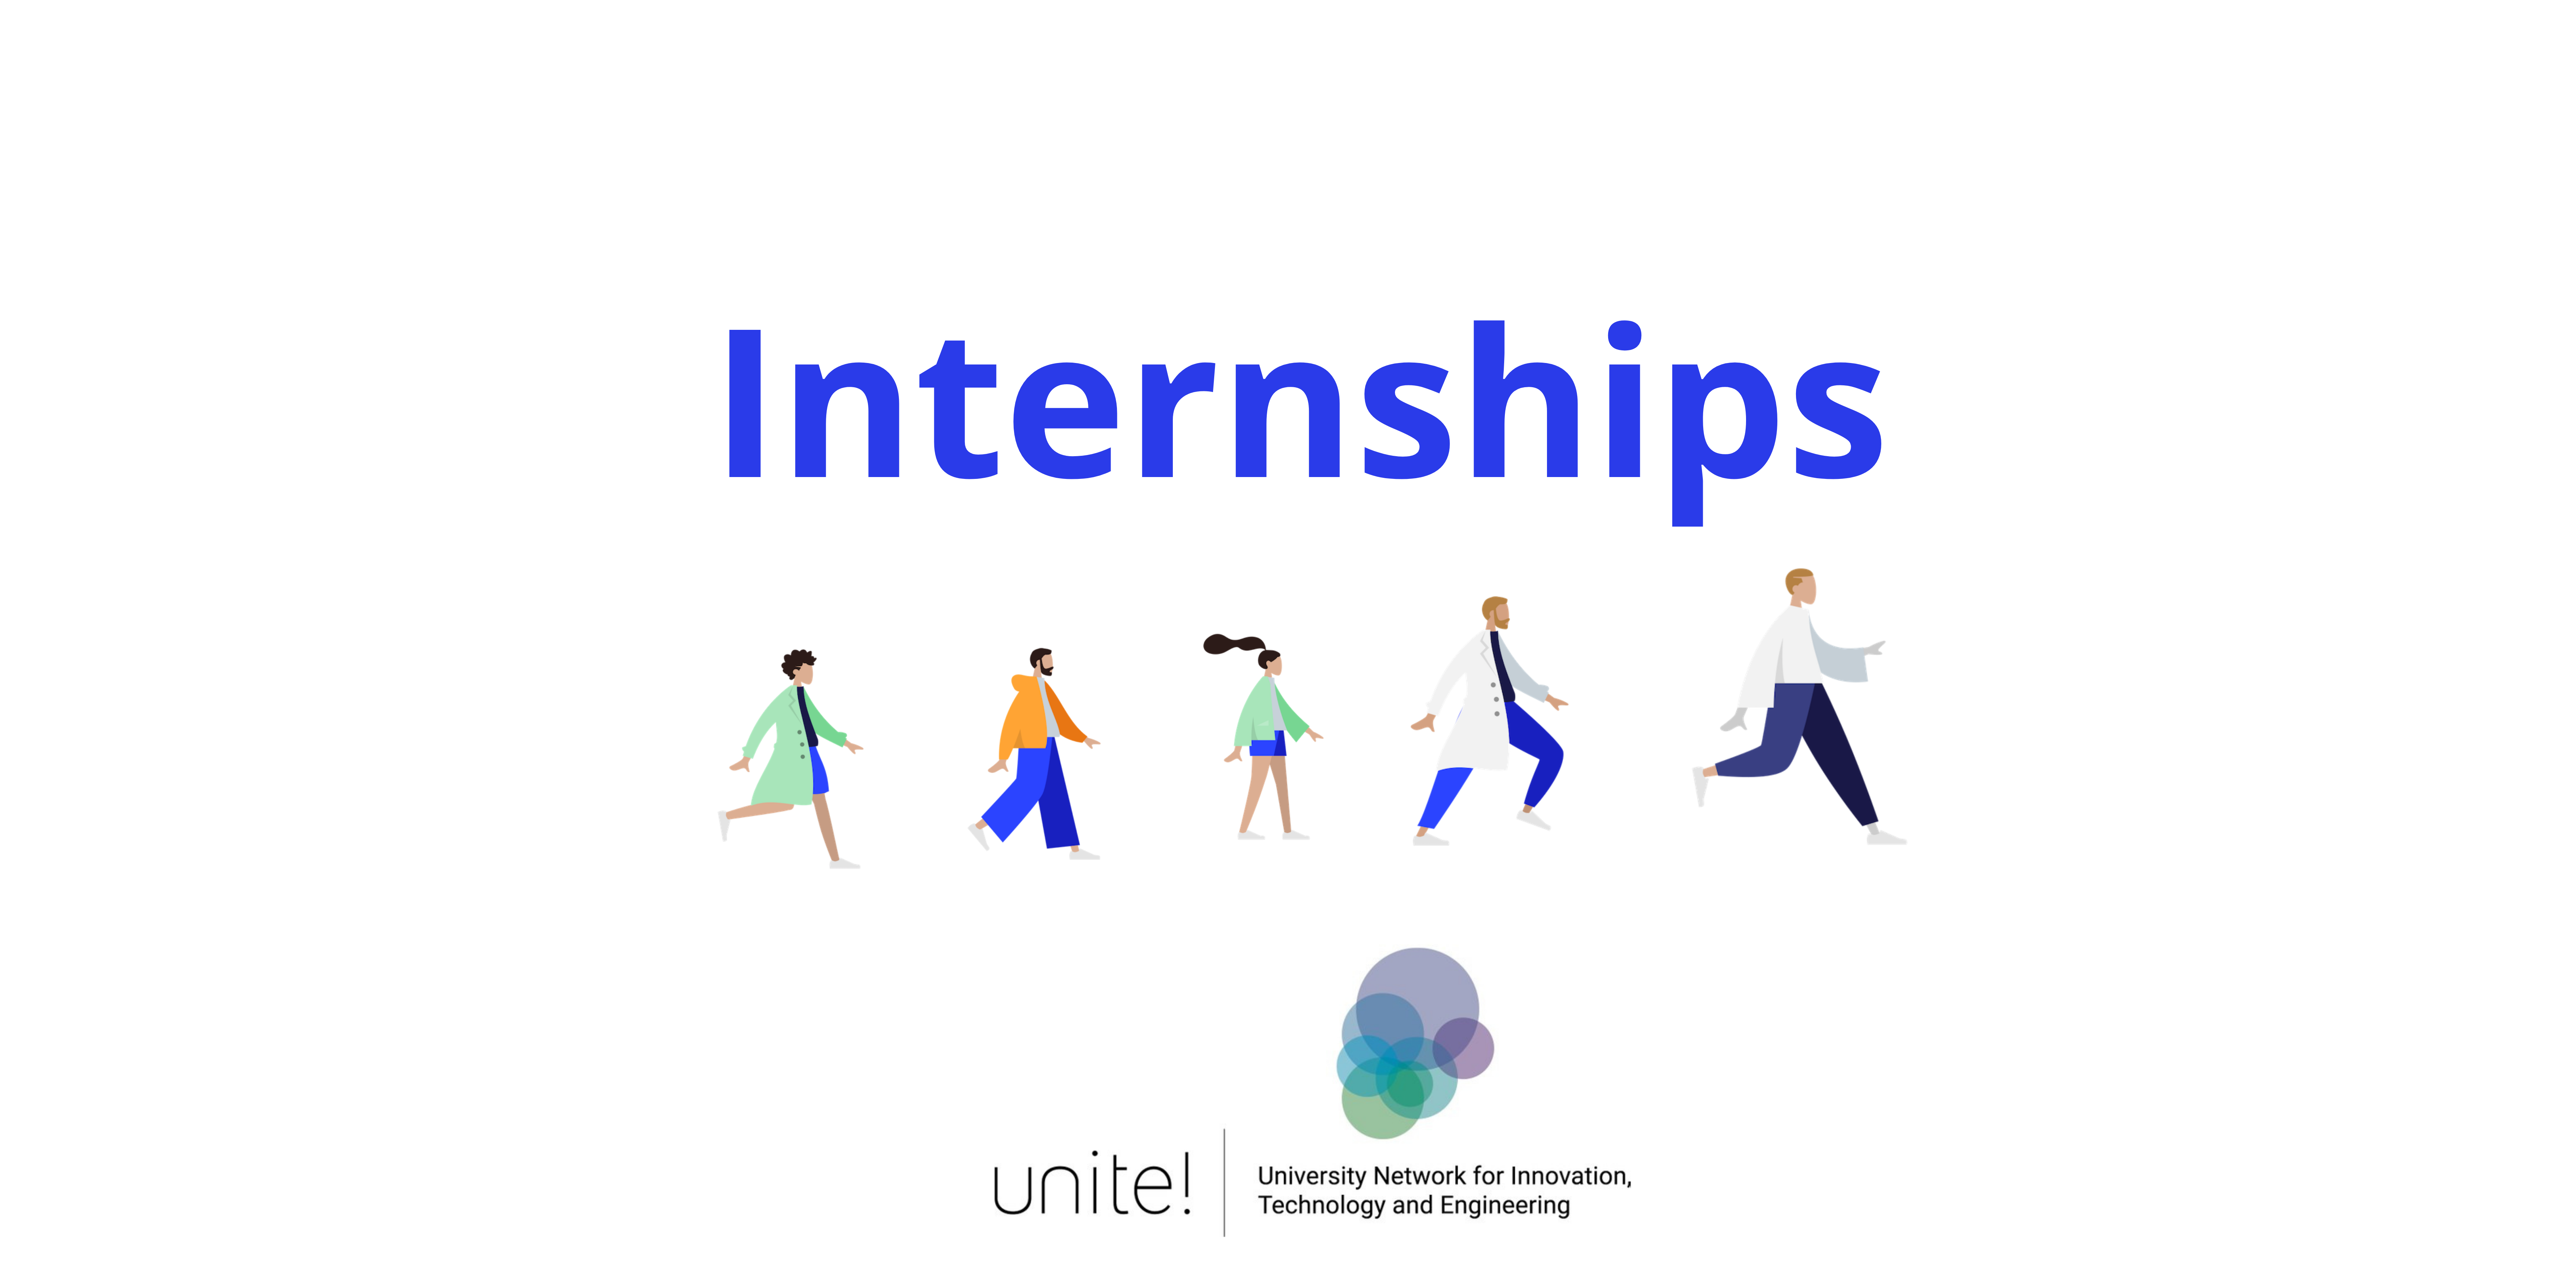 Course Unite! internships